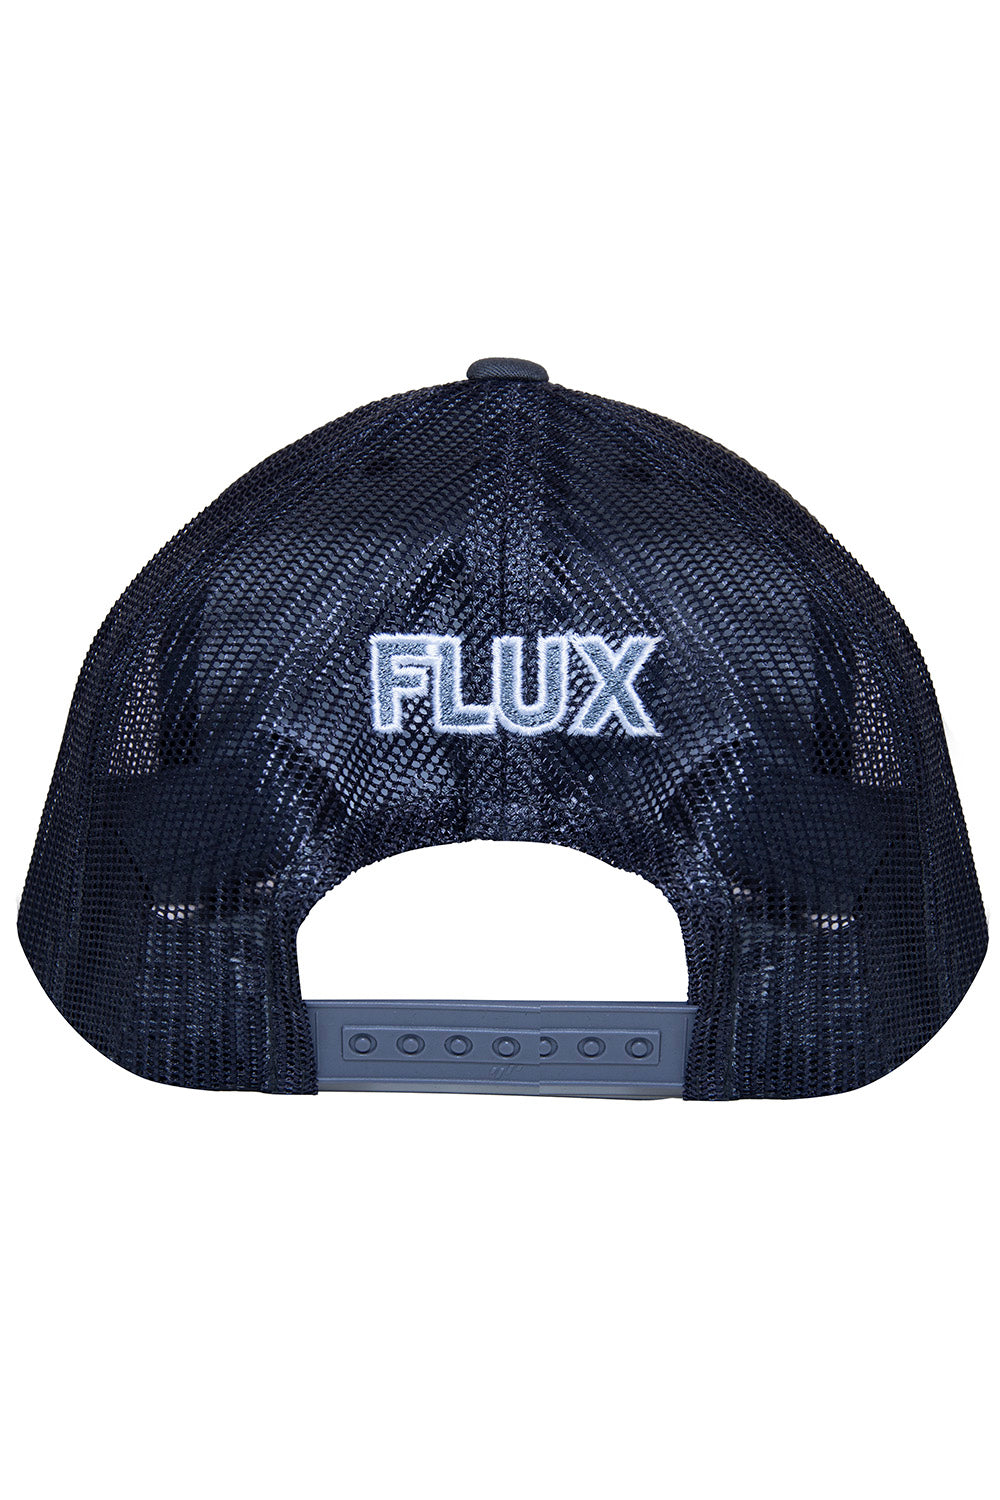 Flux Logo Cap - Grey/Grey